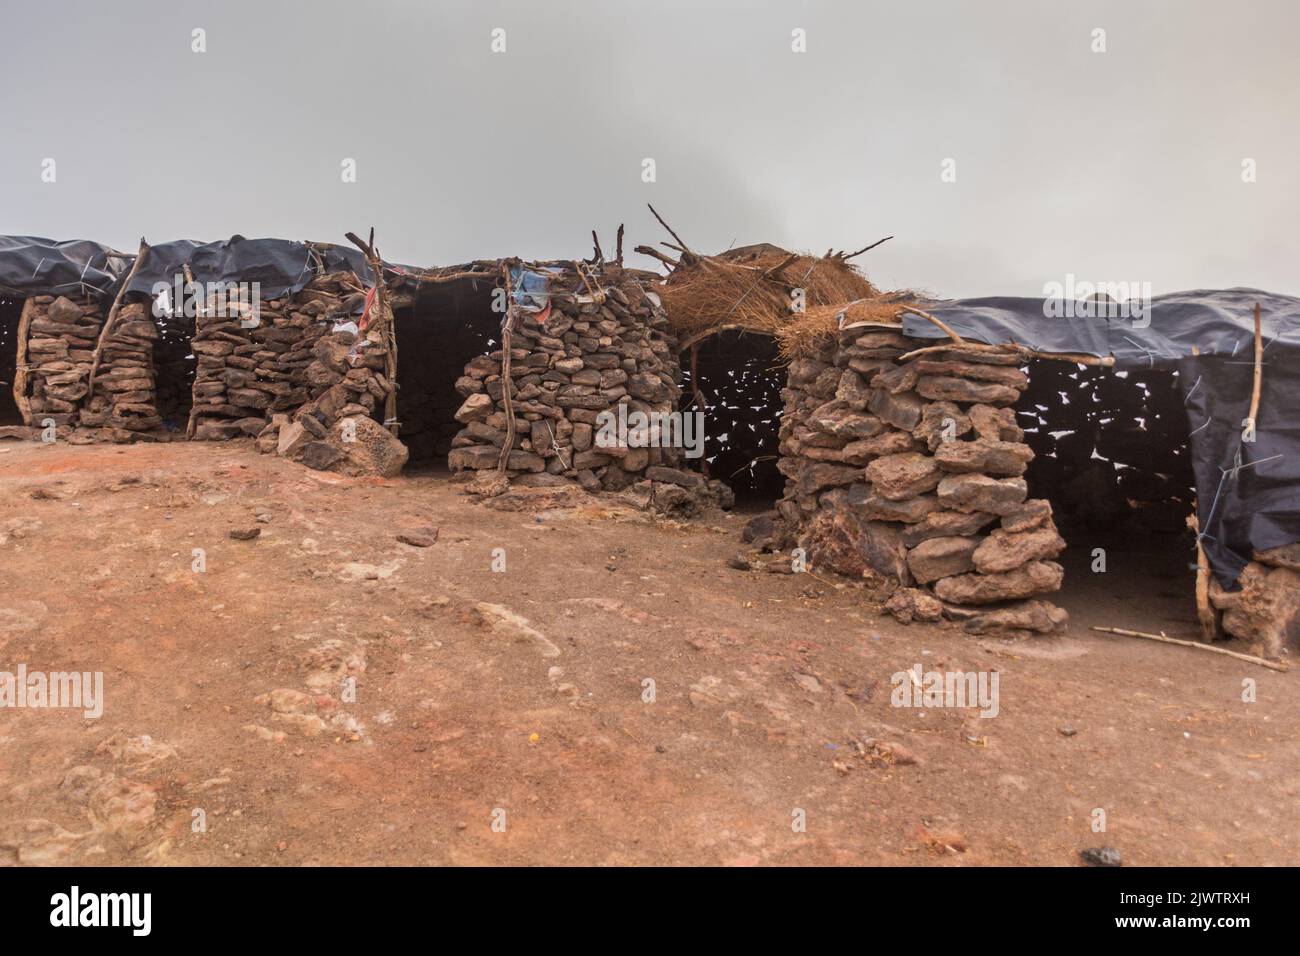 Stone huts at Erta Ale volcano crater rim in Afar depression, Ethiopia Stock Photo